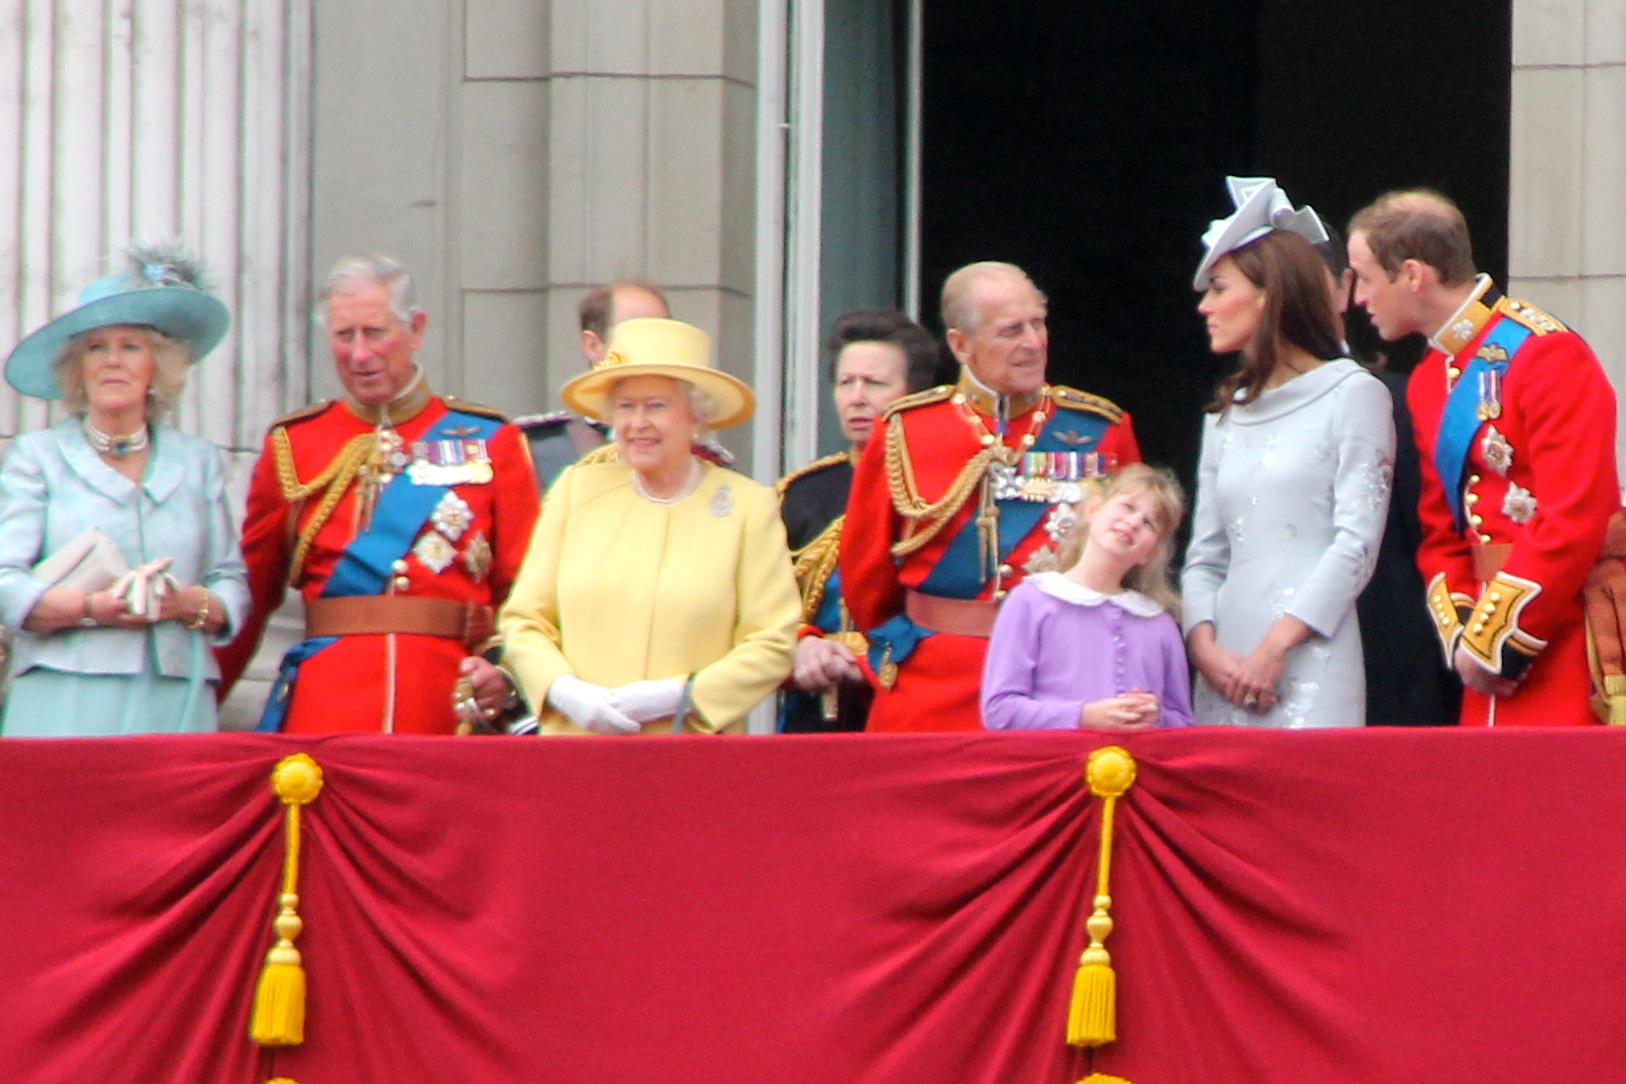 British Royal family